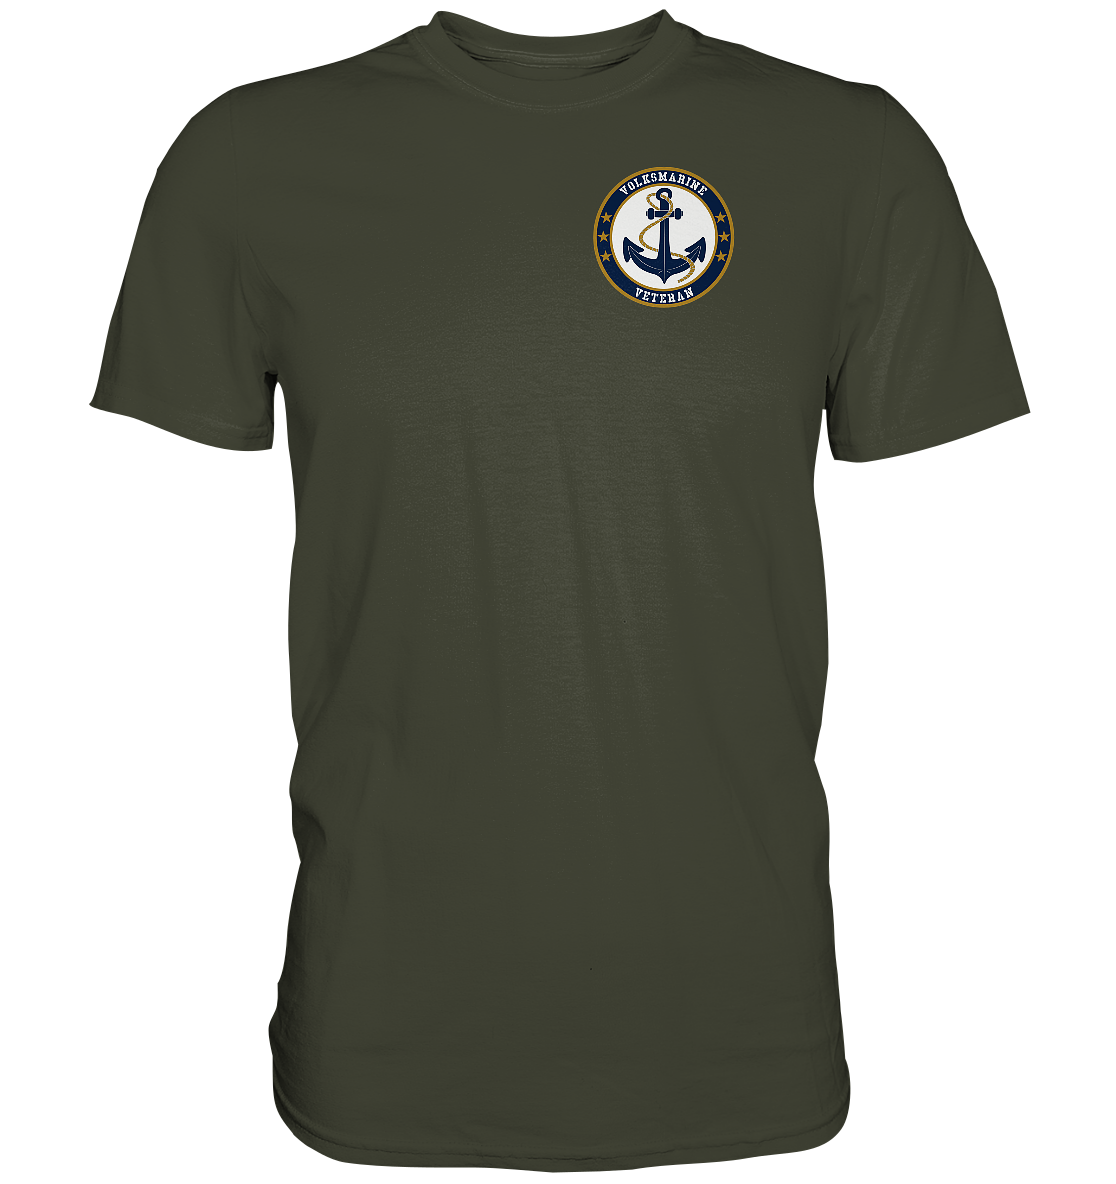 VOLKSMARINE Marine Veteran Brustlogo - Premium Shirt